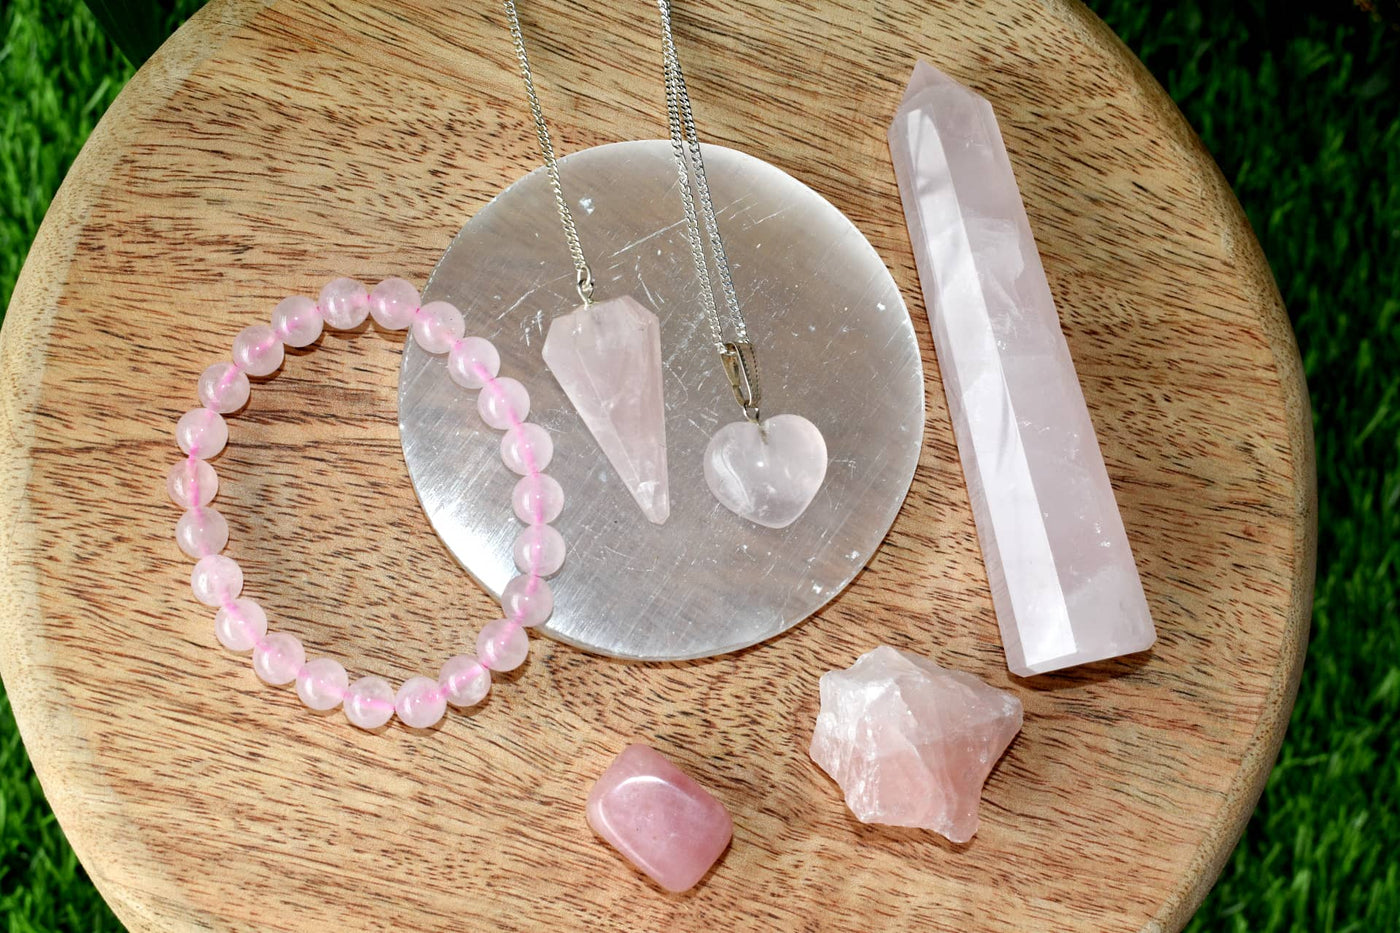 Rose Quartz Crystal Gift Set For Emotional Support and Protection, Real Polished Gemstones.